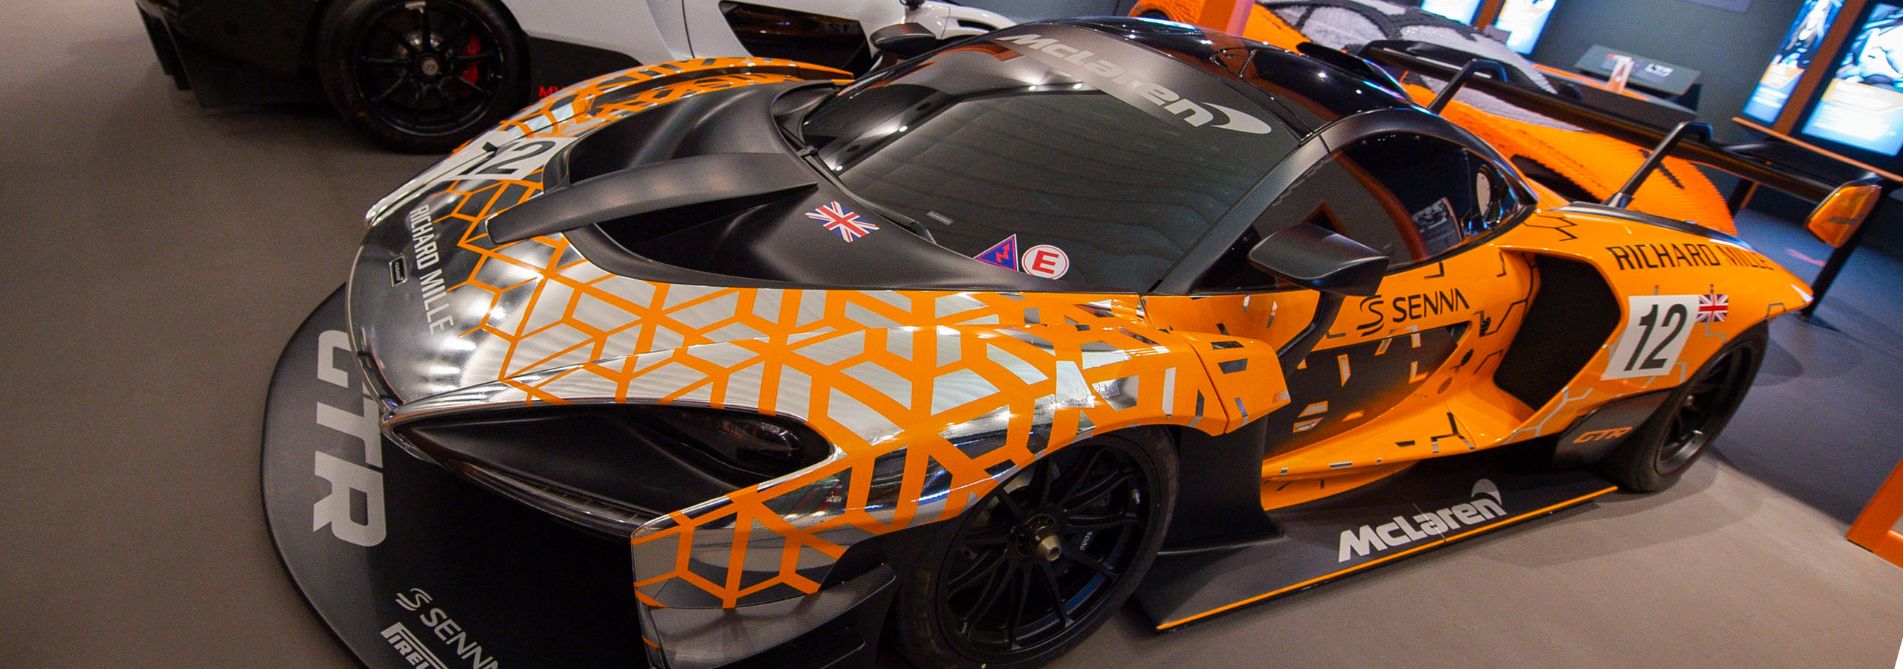 McLaren-concept-car-header-1.jpg